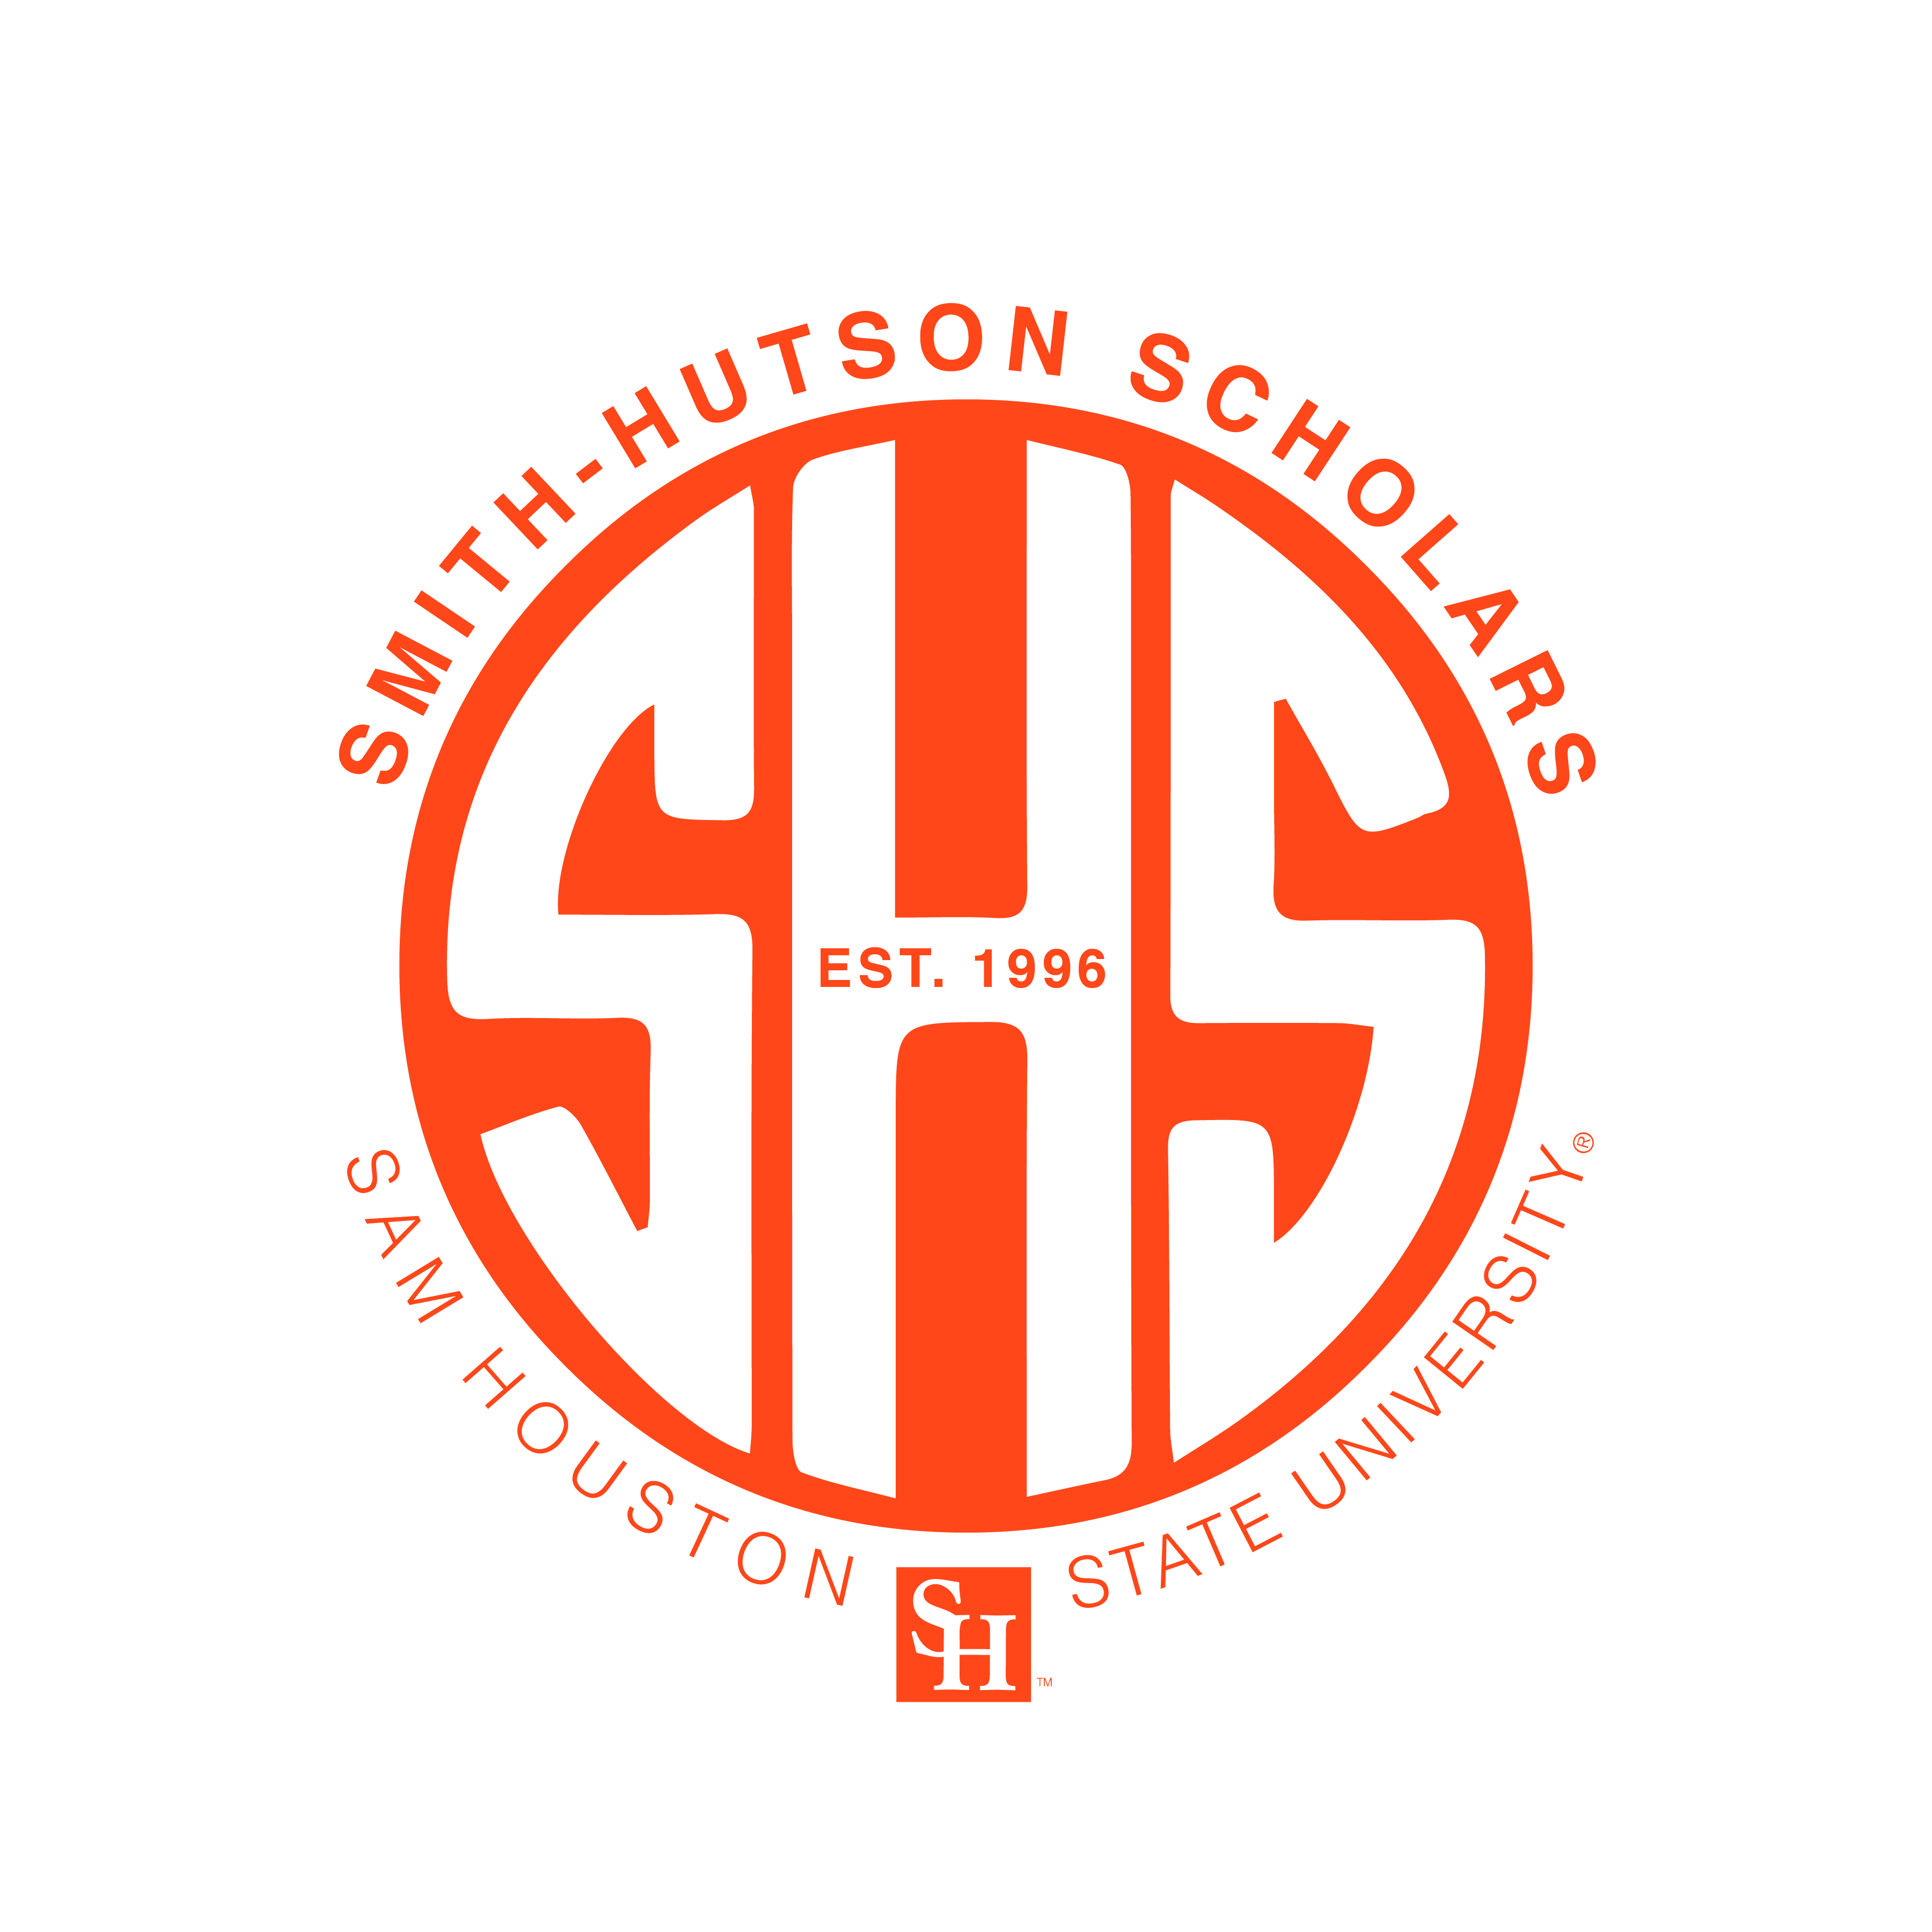 Official Smith-Hutson Scholars design element.